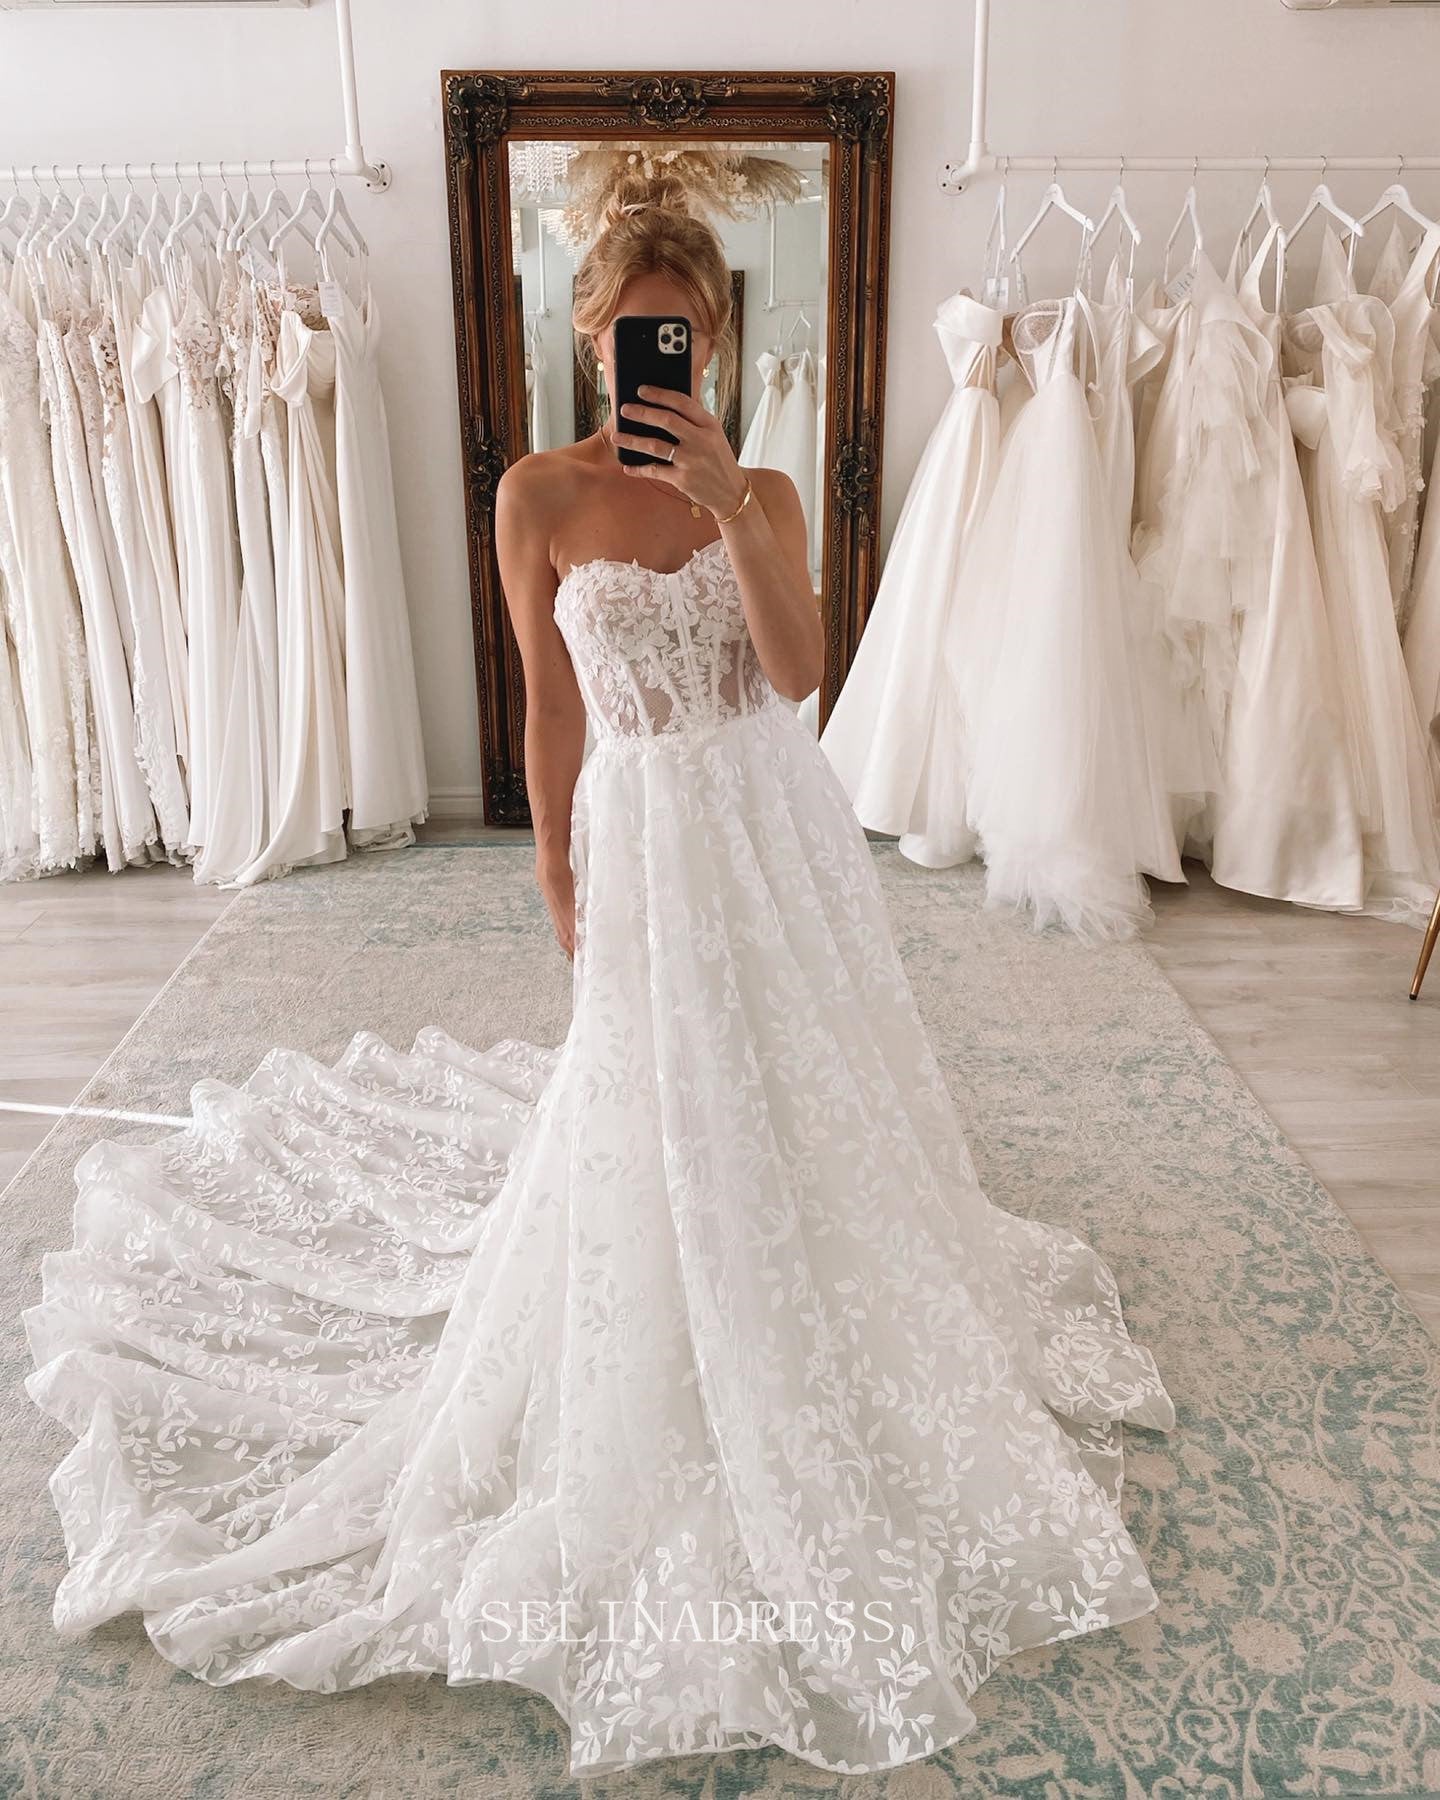 Sweetheart Puffy A-Line Satin Tulle Short Wedding Dress